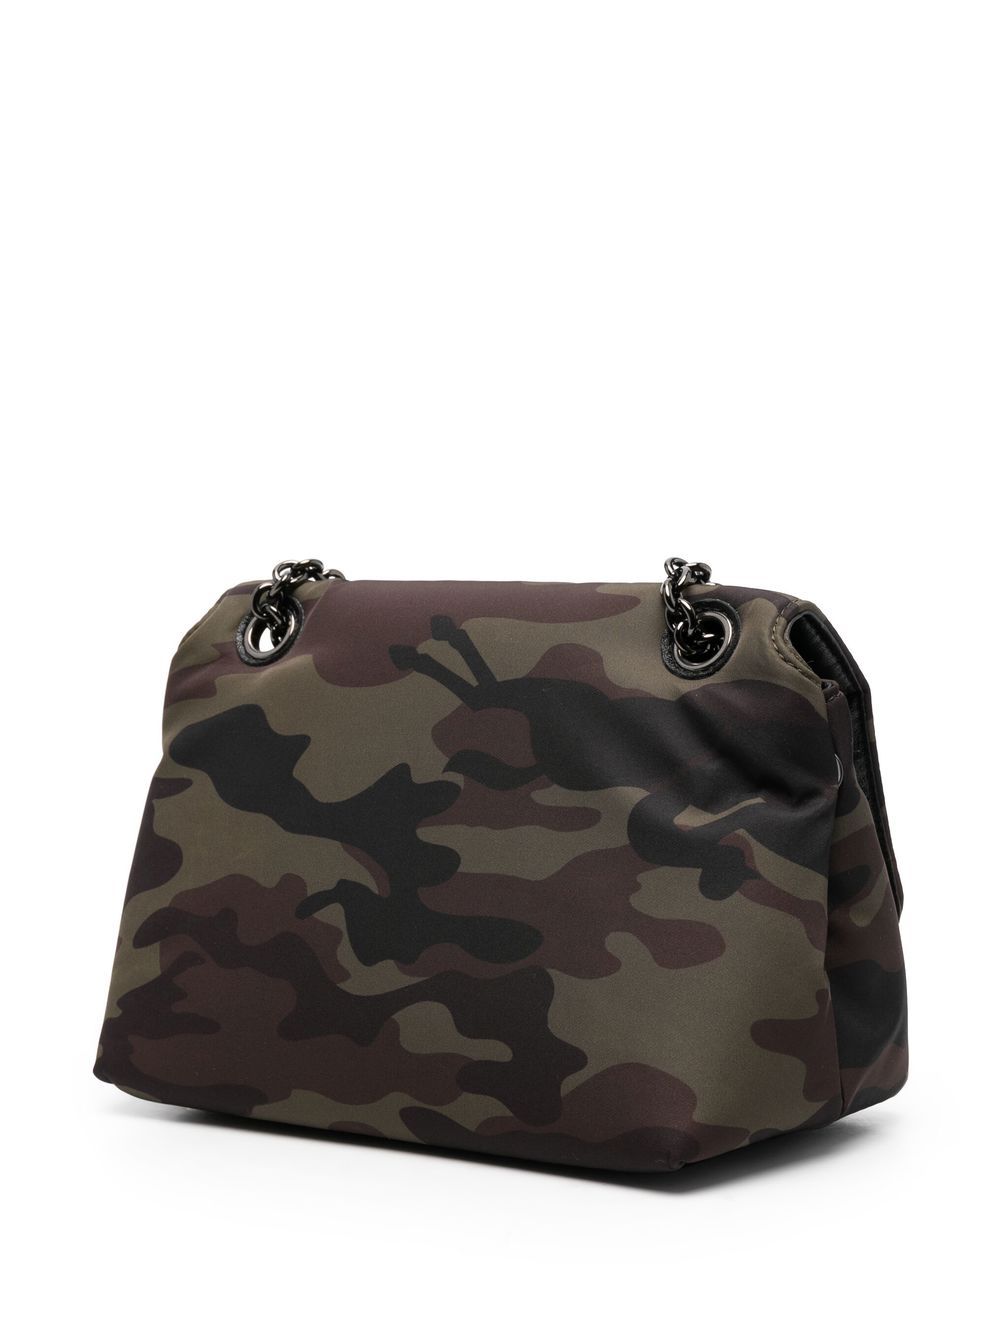 PRADA Camouflage Shoulder Bags for Women